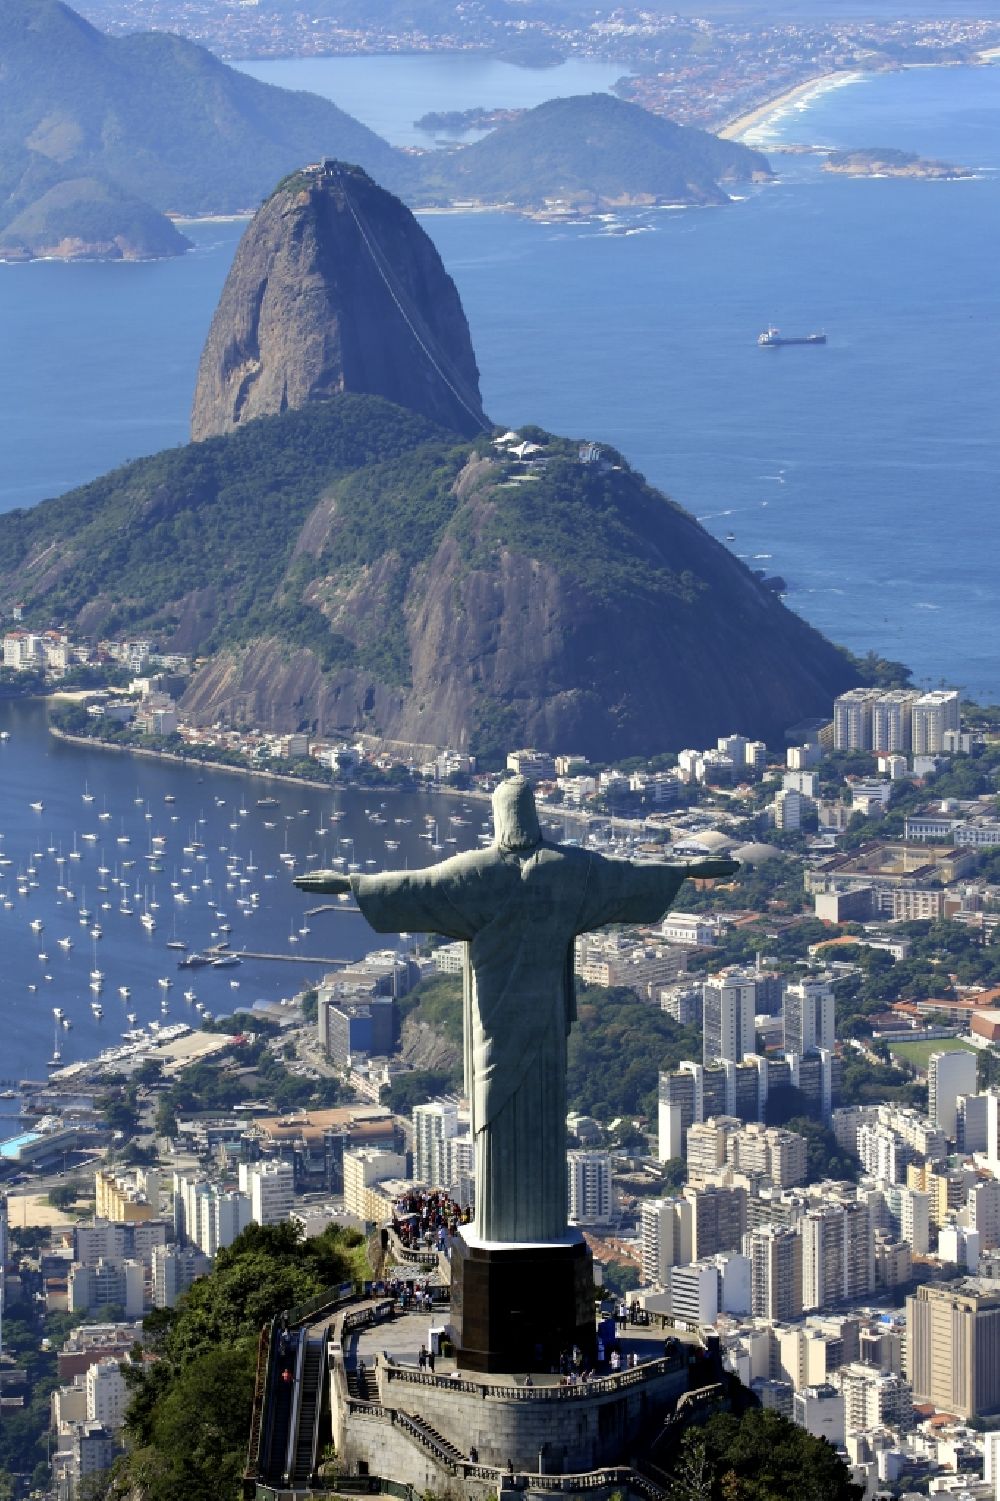 Rio de Janeiro von oben - Statue Cristo Redentor auf dem Berg Corcovado in den Tijuca-Wäldern in Rio de Janeiro in Brasilien